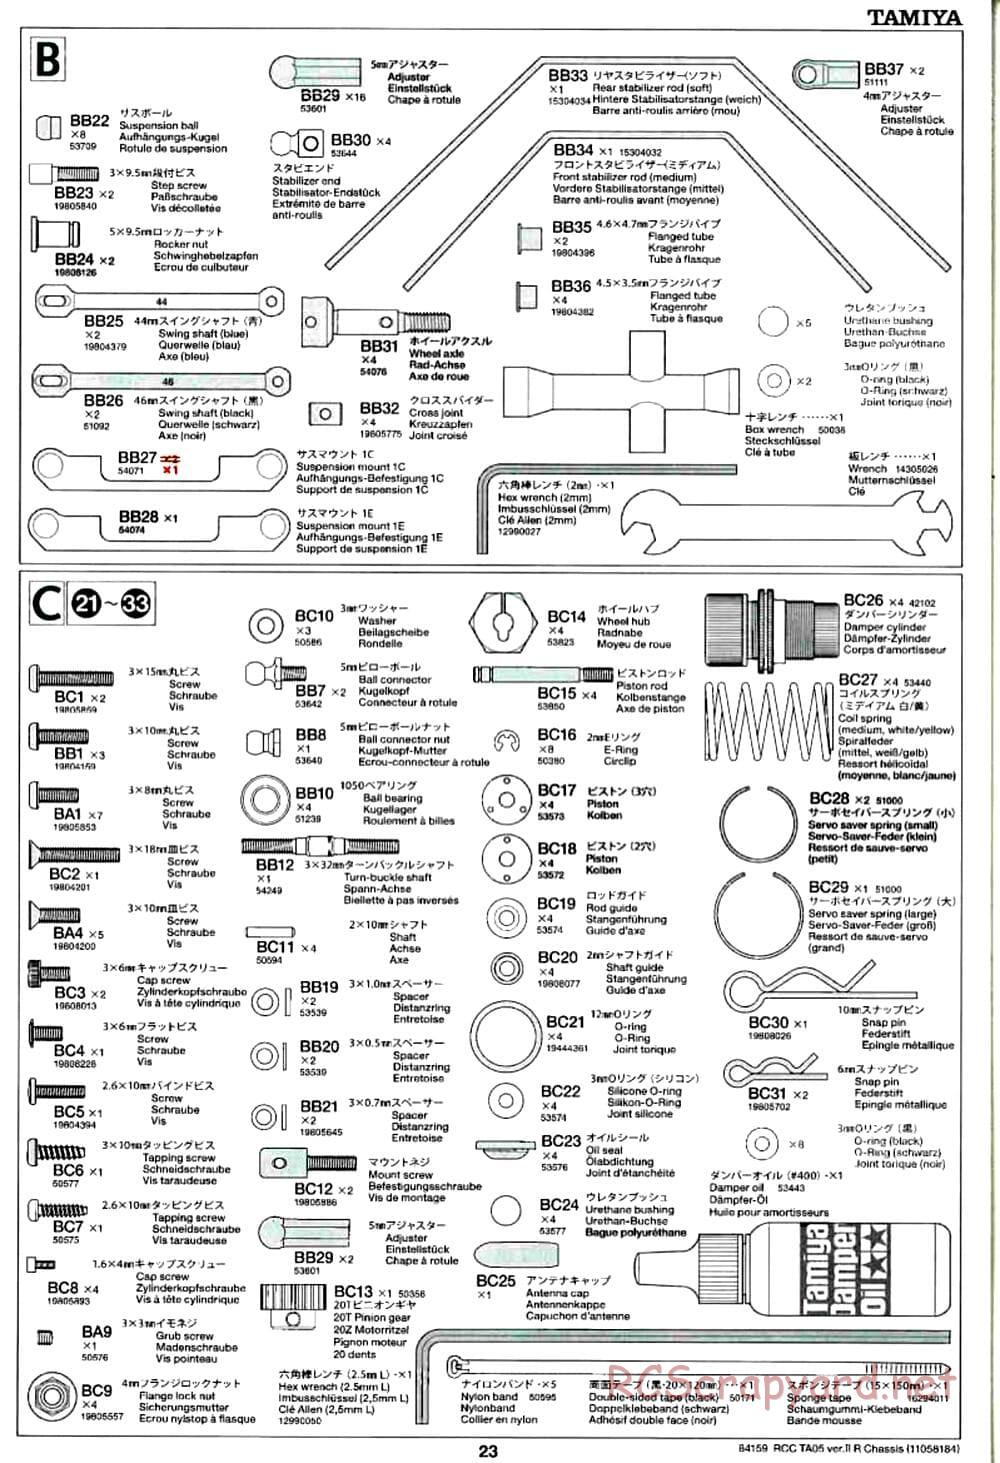 Tamiya - TA05 Ver.II R Chassis - Manual - Page 23